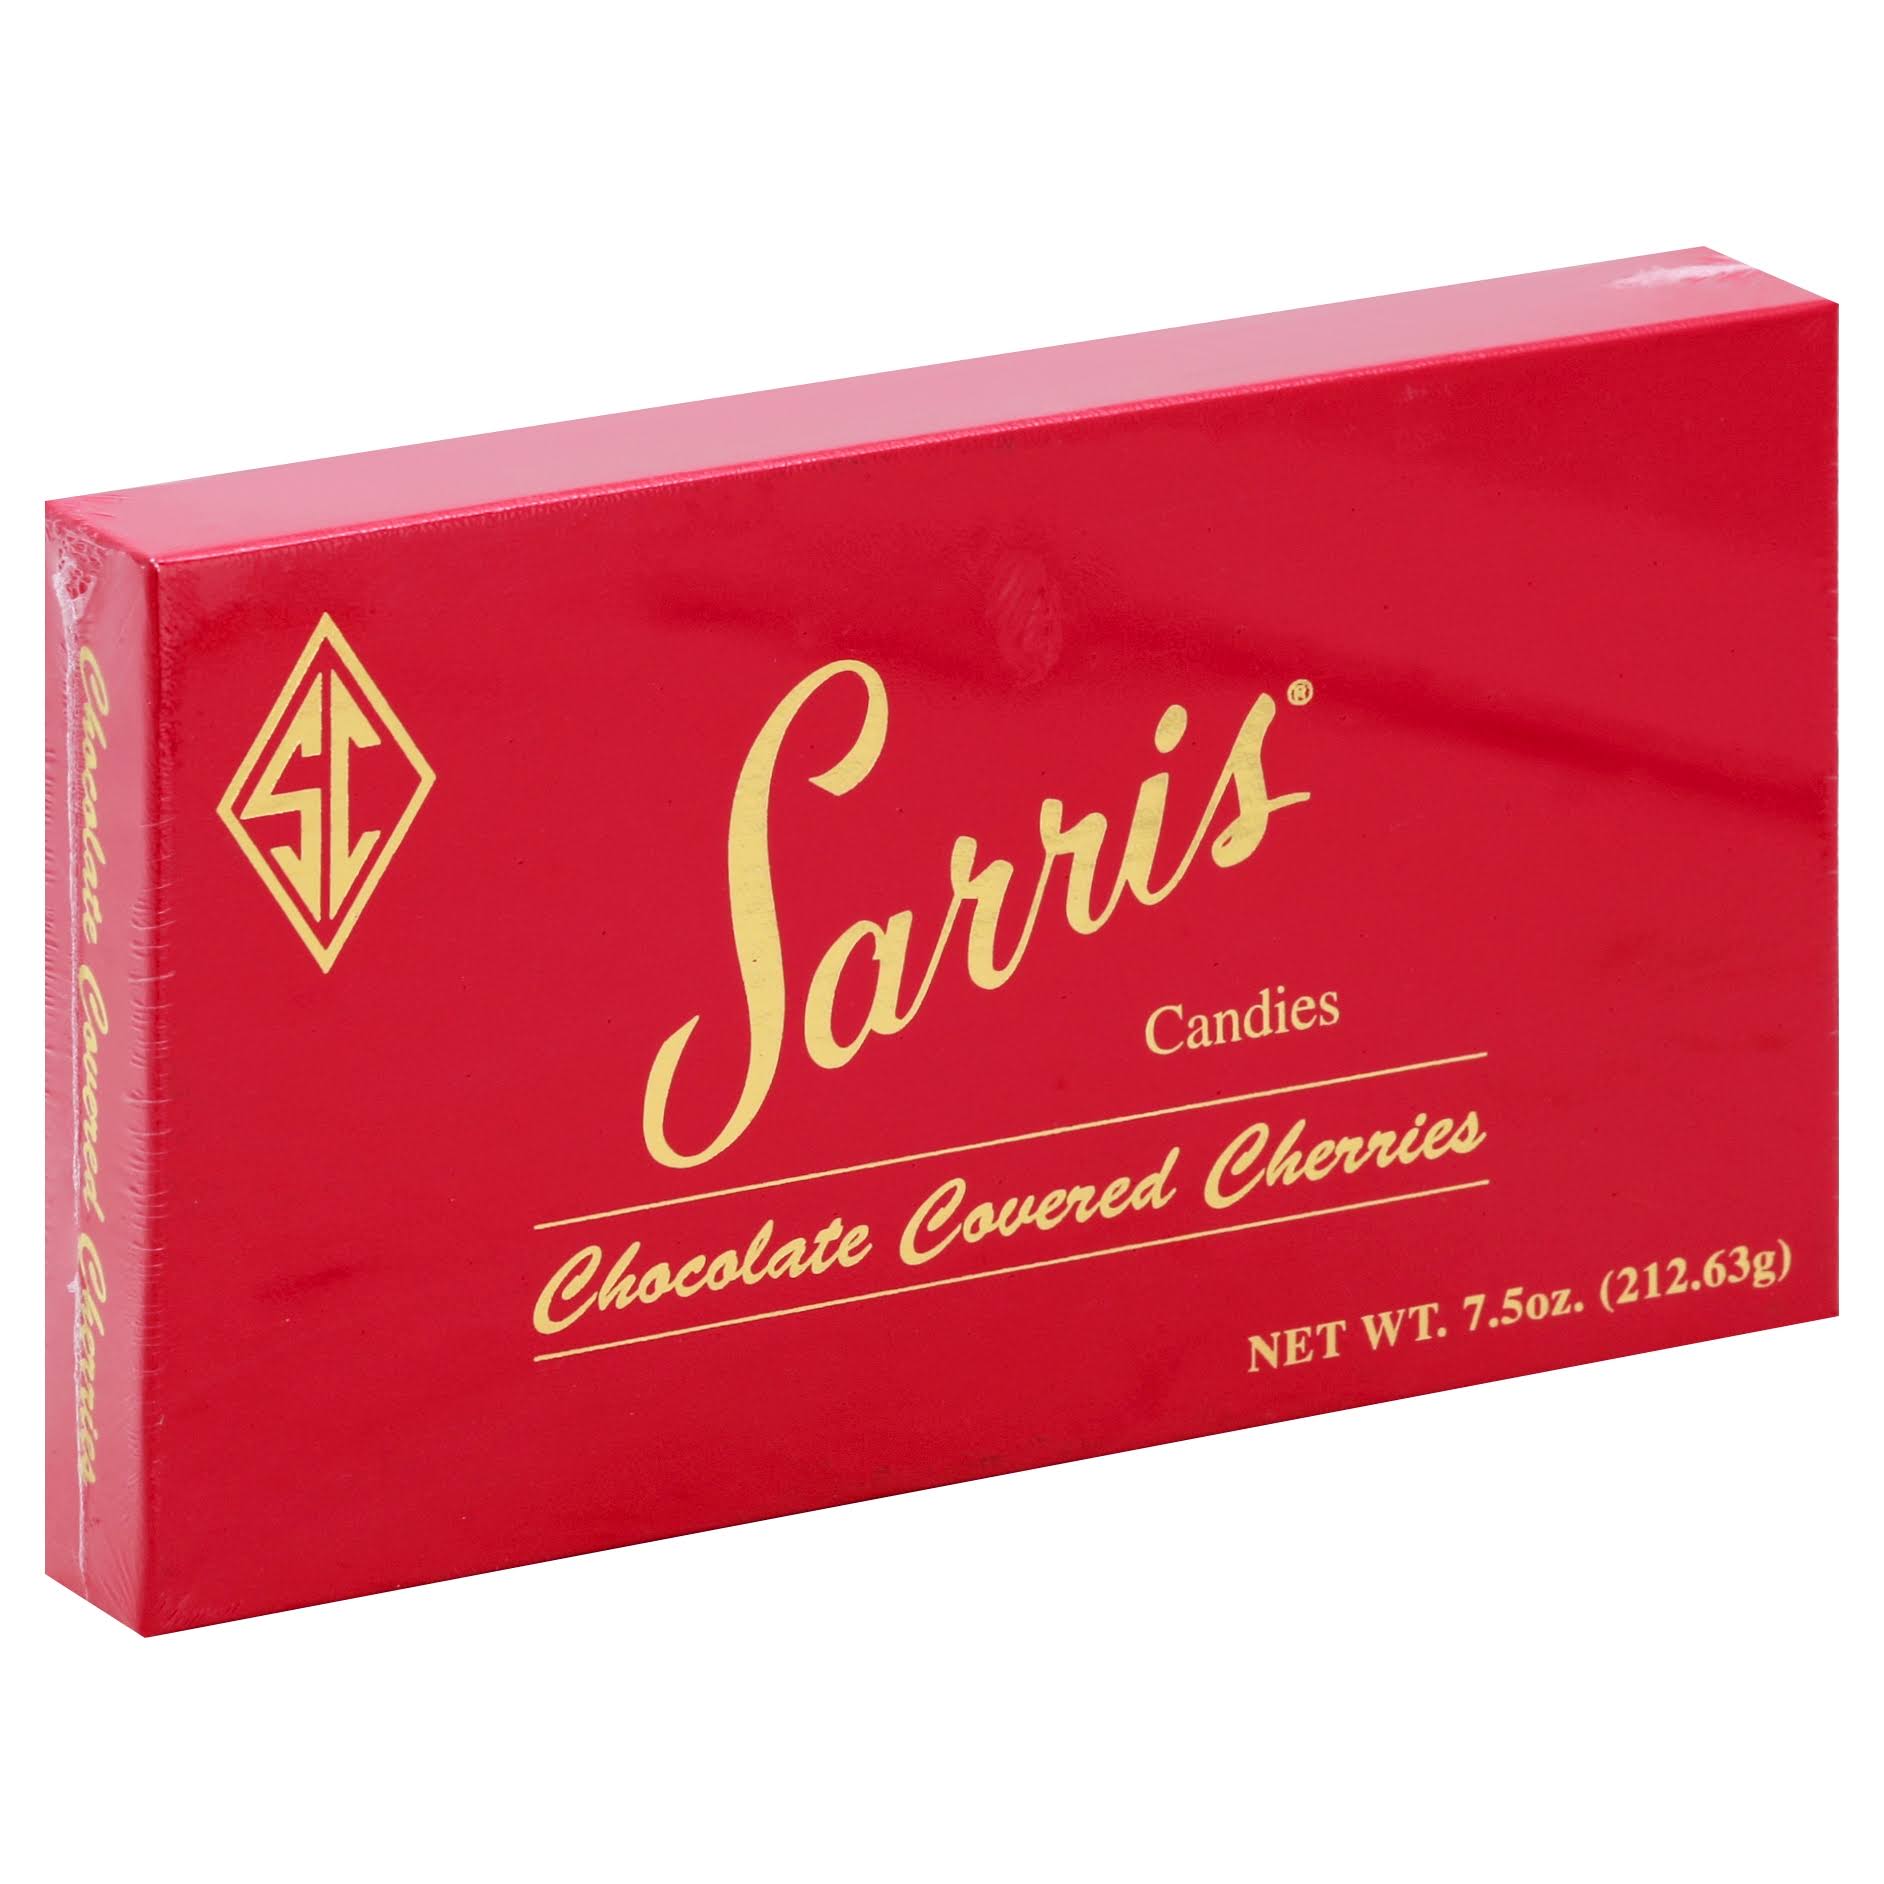 Sarris Candies Chocolate Covered Cherries - 7.5 oz